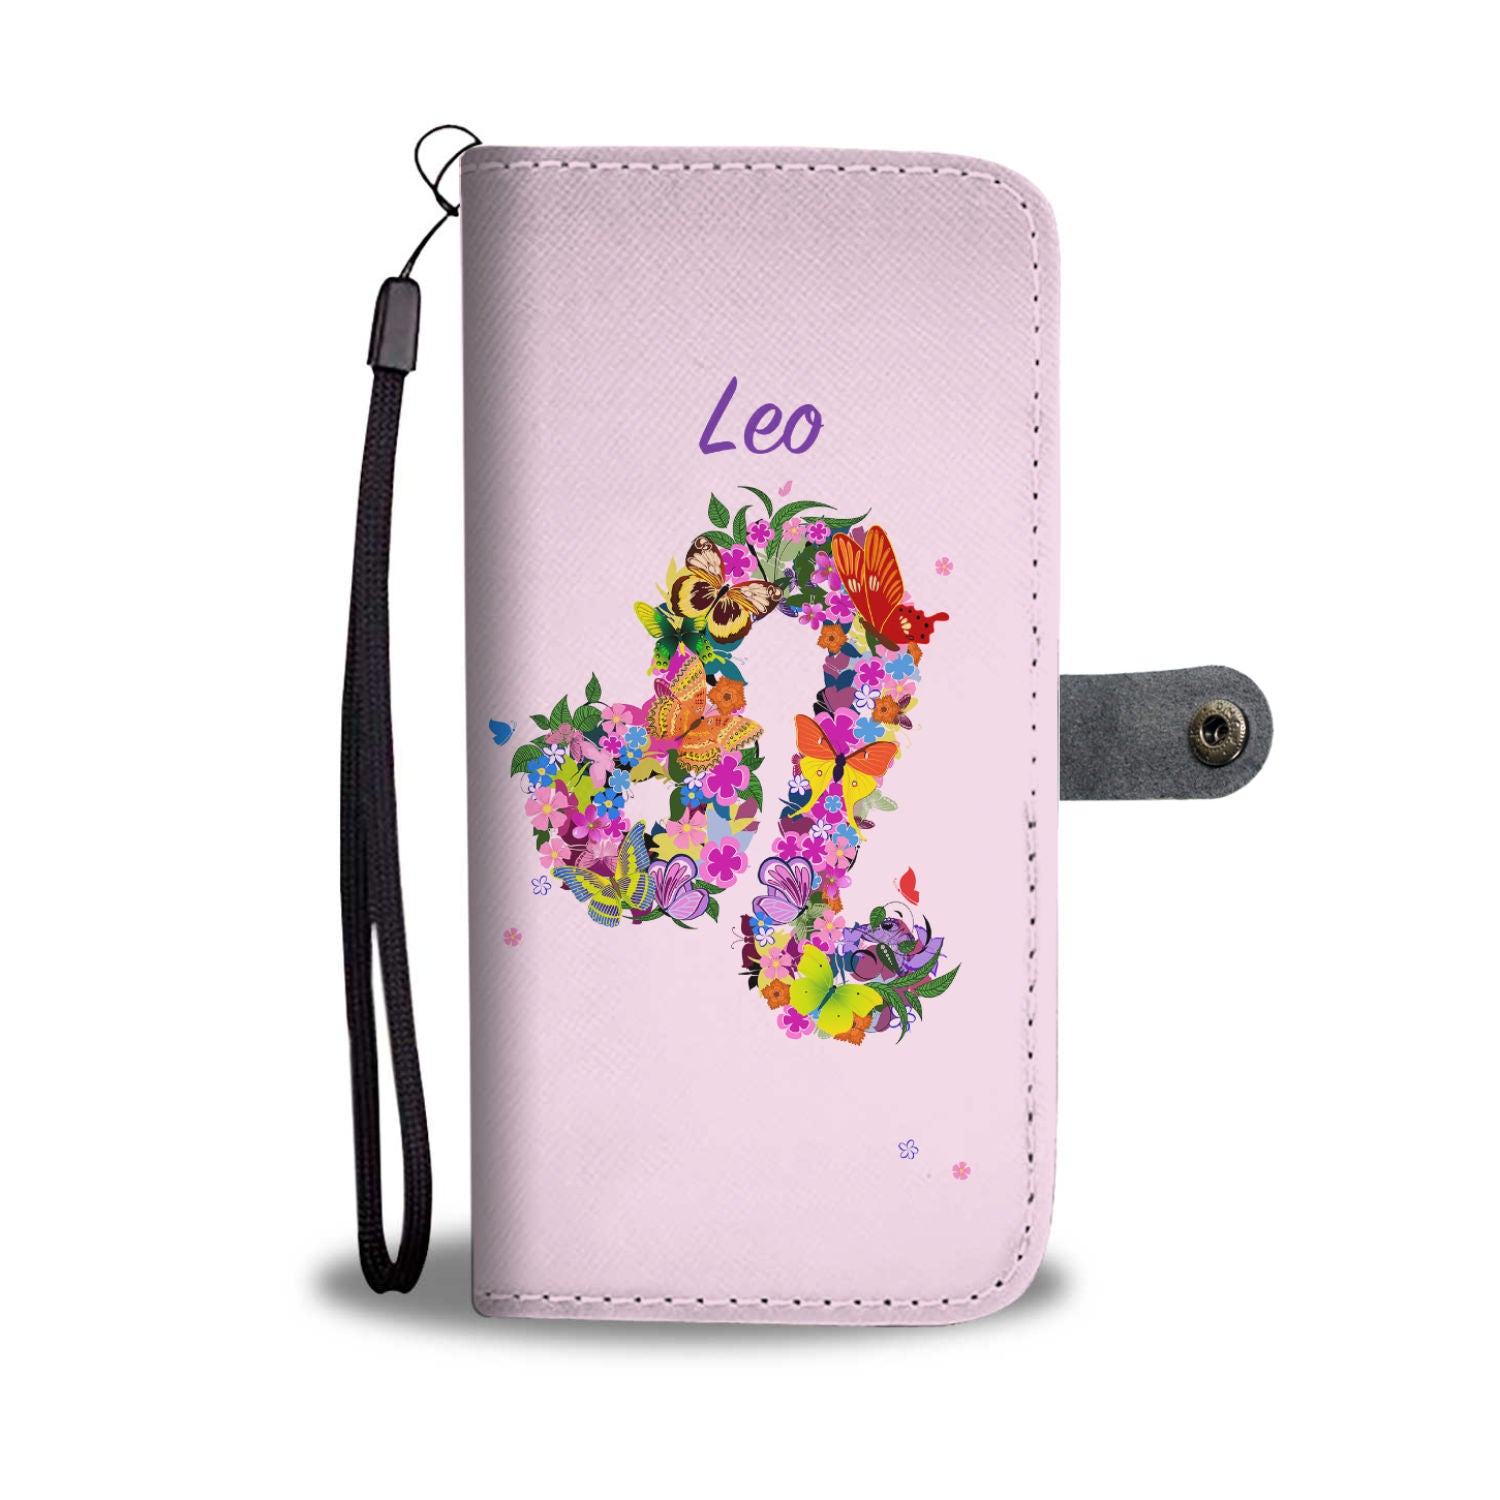 Leo Floral Phone Wallet